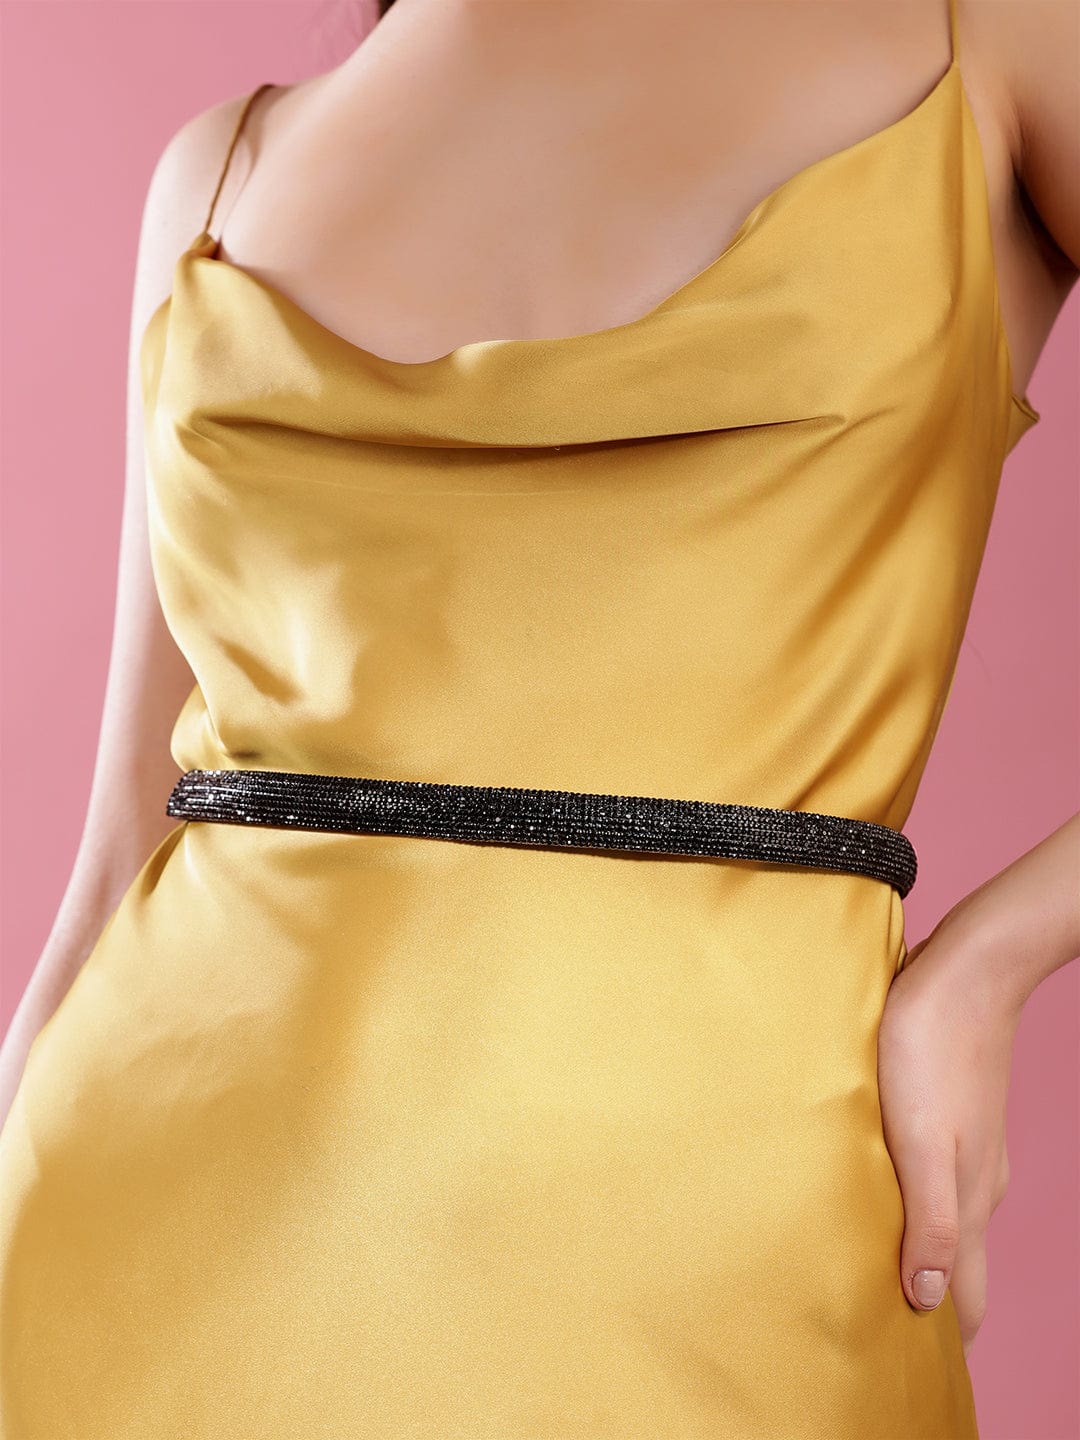 Rubans Black Crystal Studded Adjustable Fabric Belt. Belt